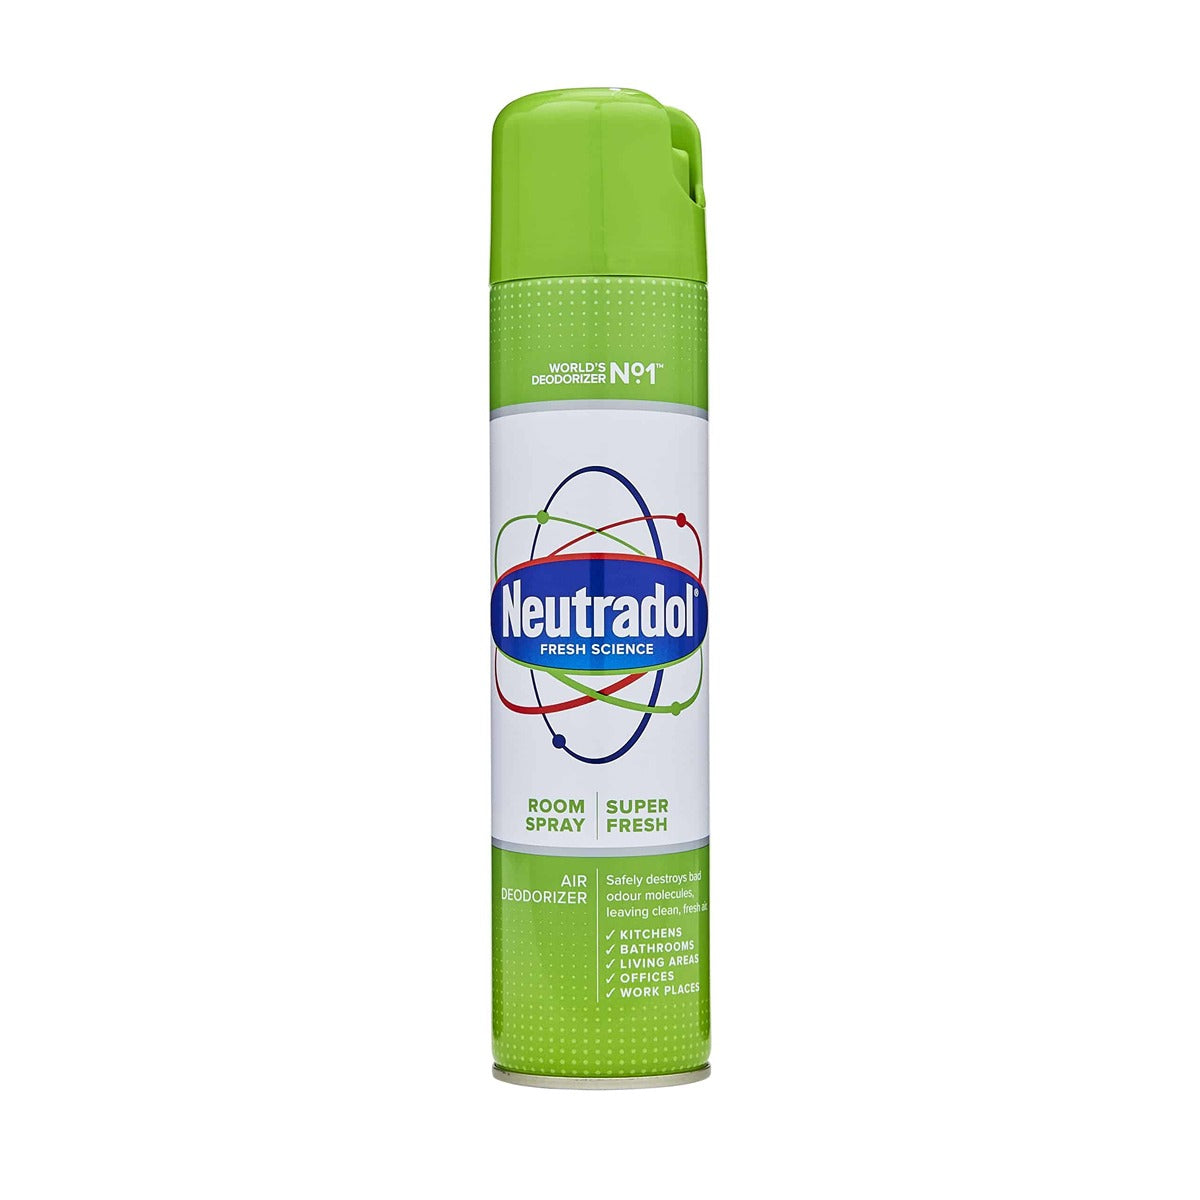 Neutradol - Room Spray Odour Destroyer - 300ml - Continental Food Store